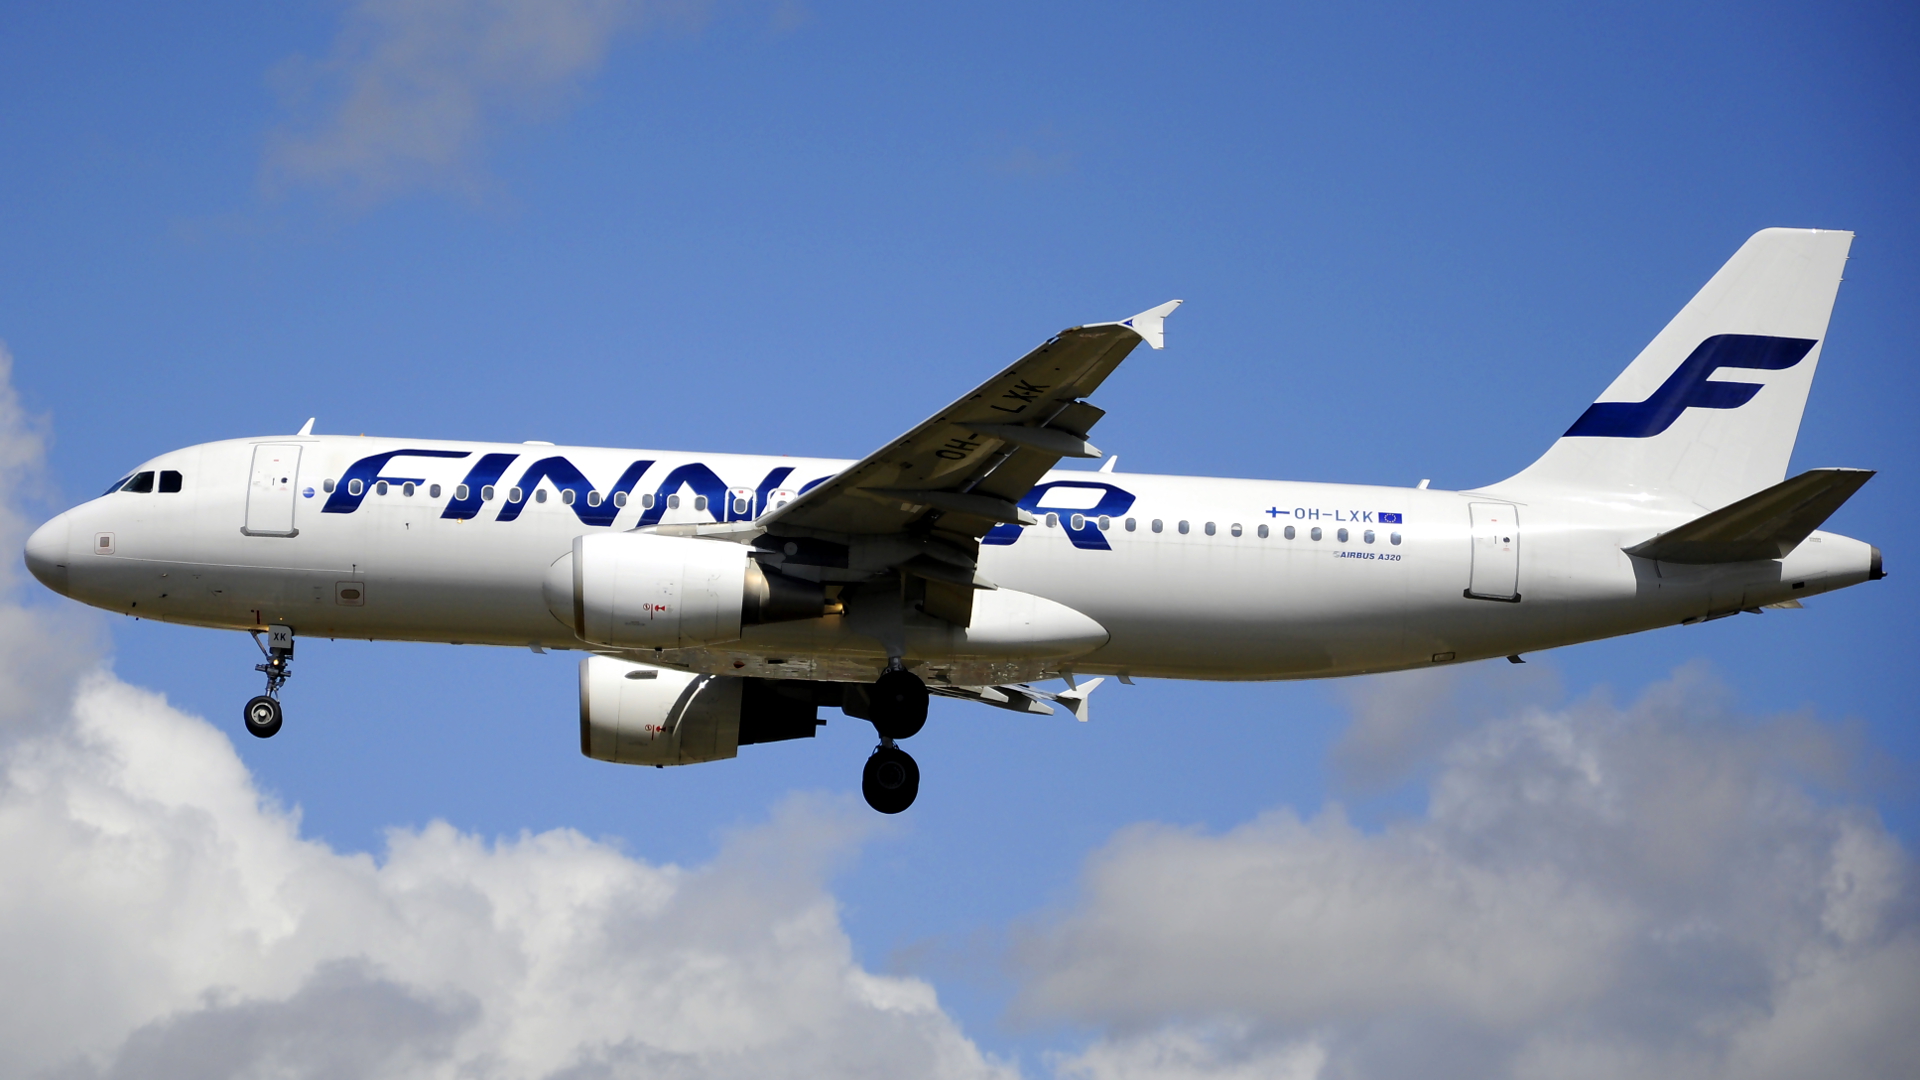 OH-LXK ✈ Finnair Airbus 320-214 @ London-Heathrow